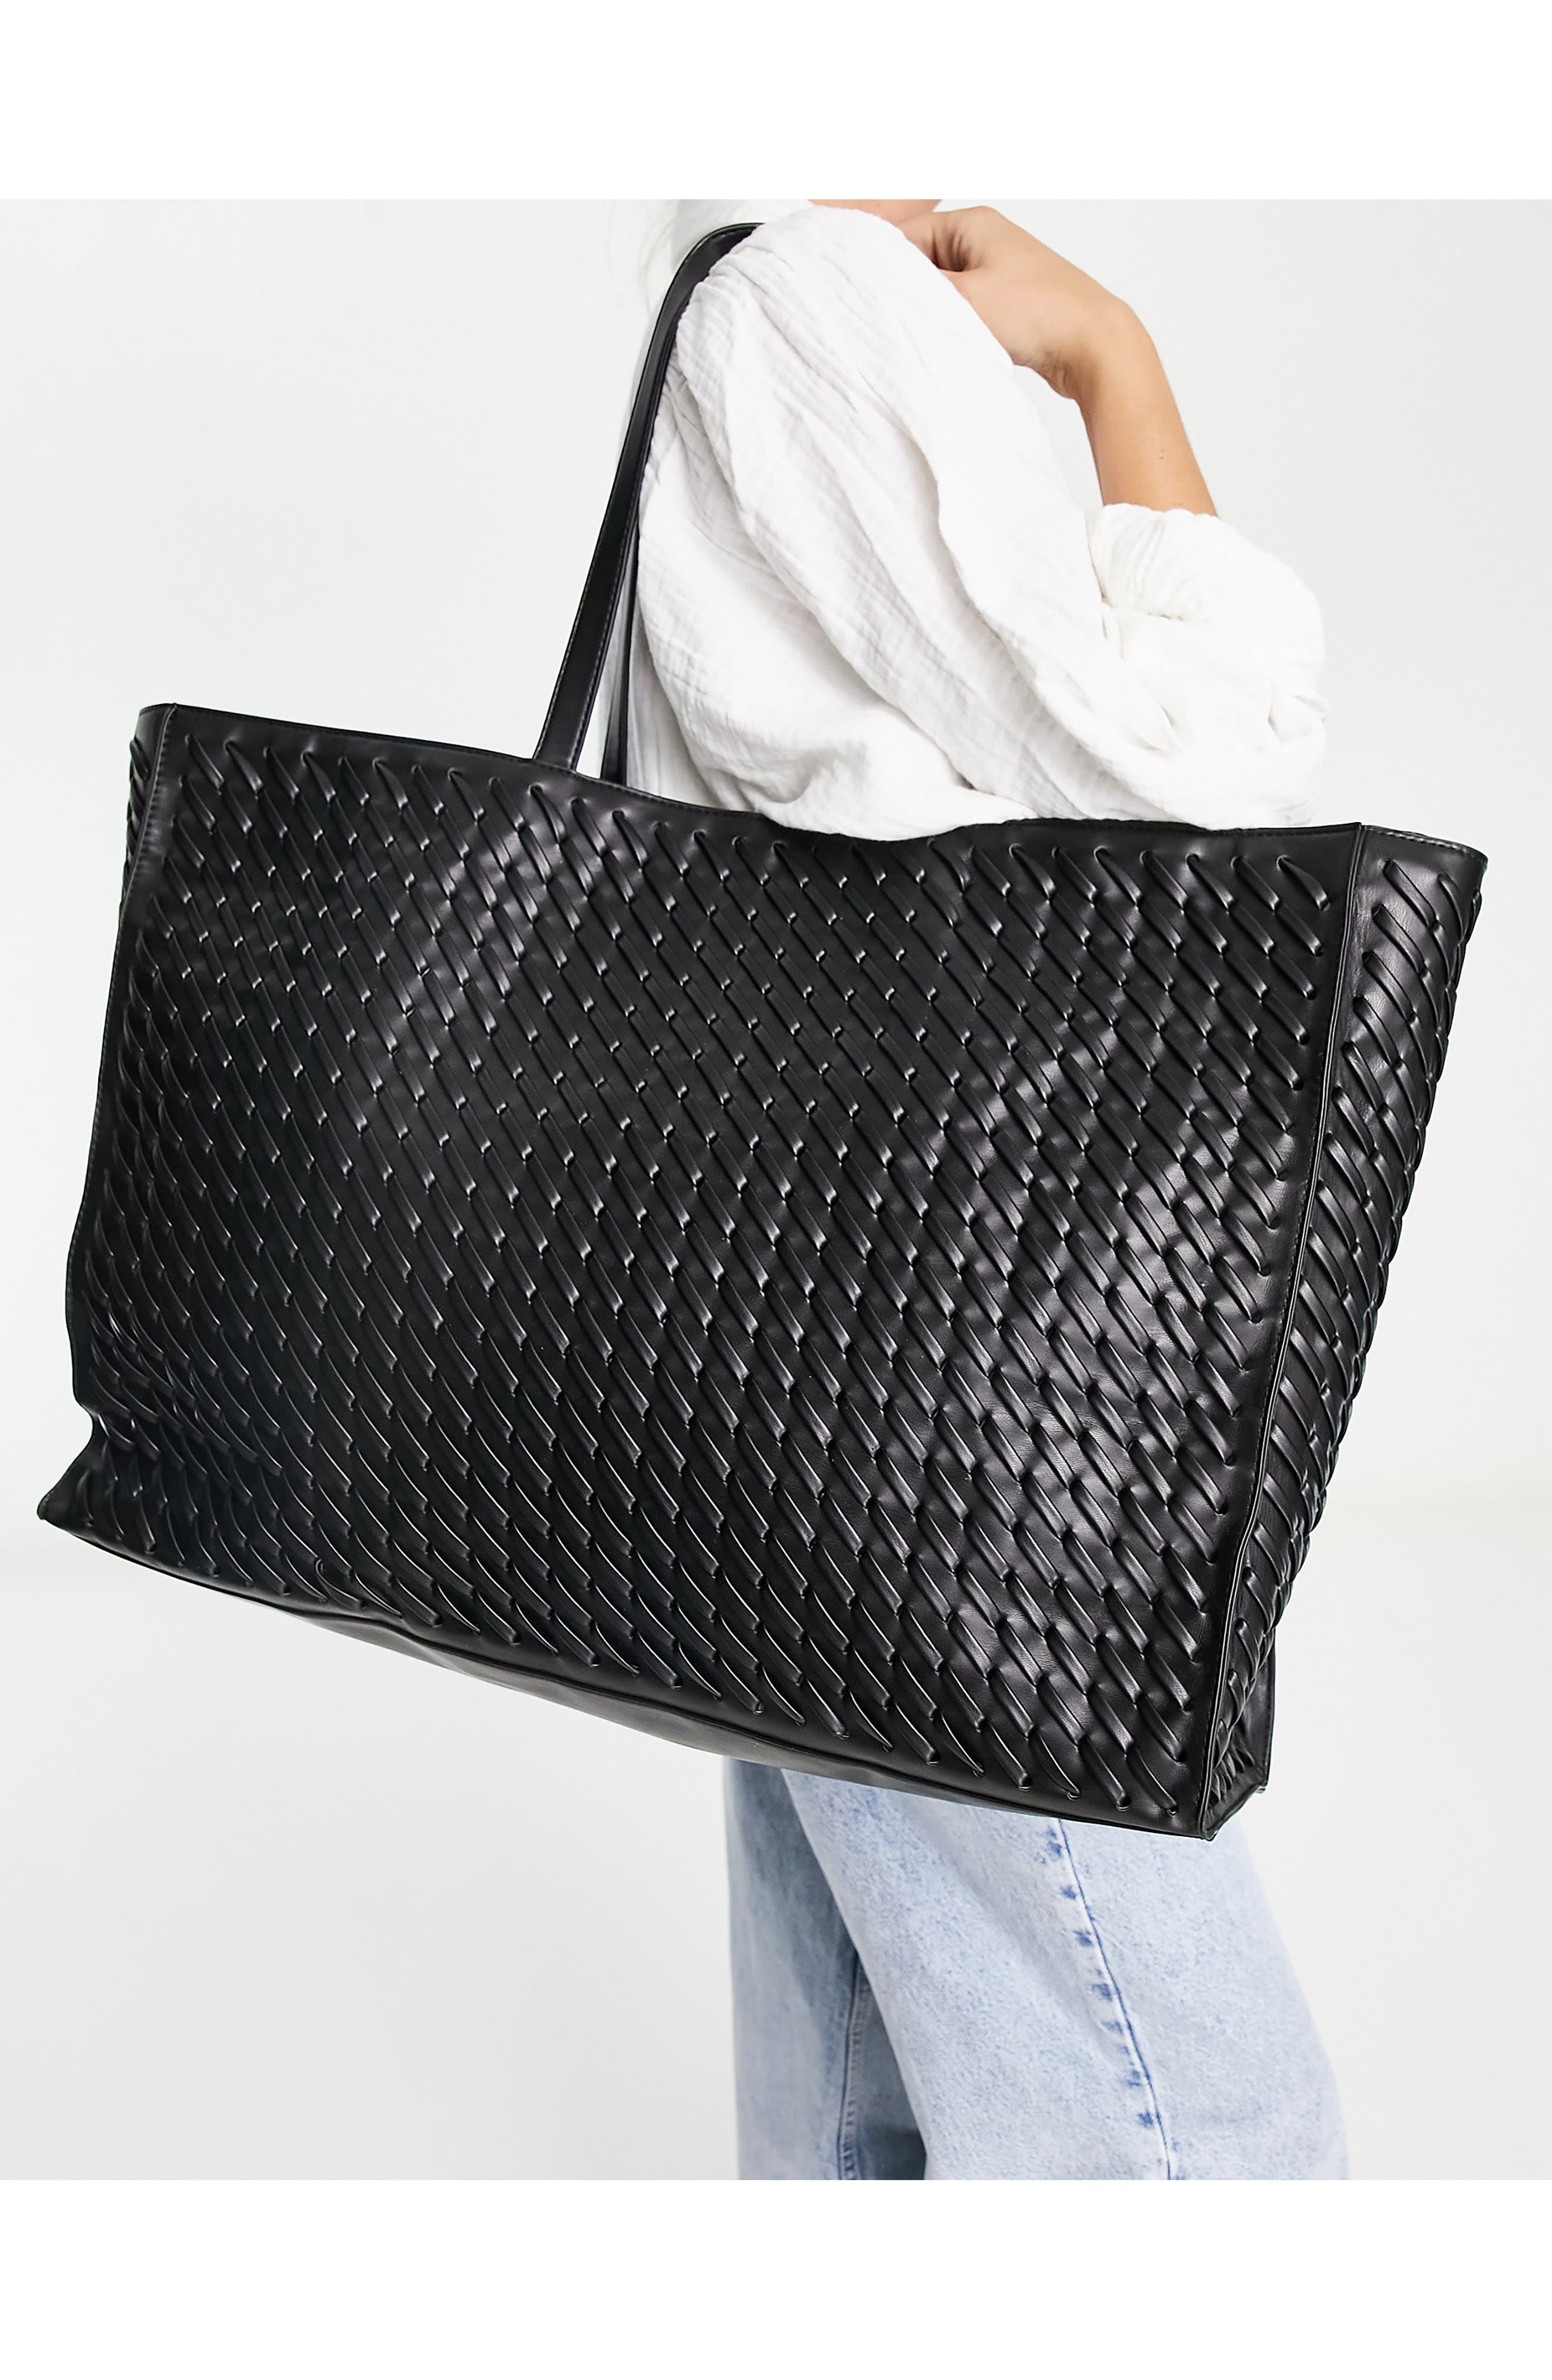 Large New Ladies Girls Moda Faux Leather Style School Handbag Black and Tan 